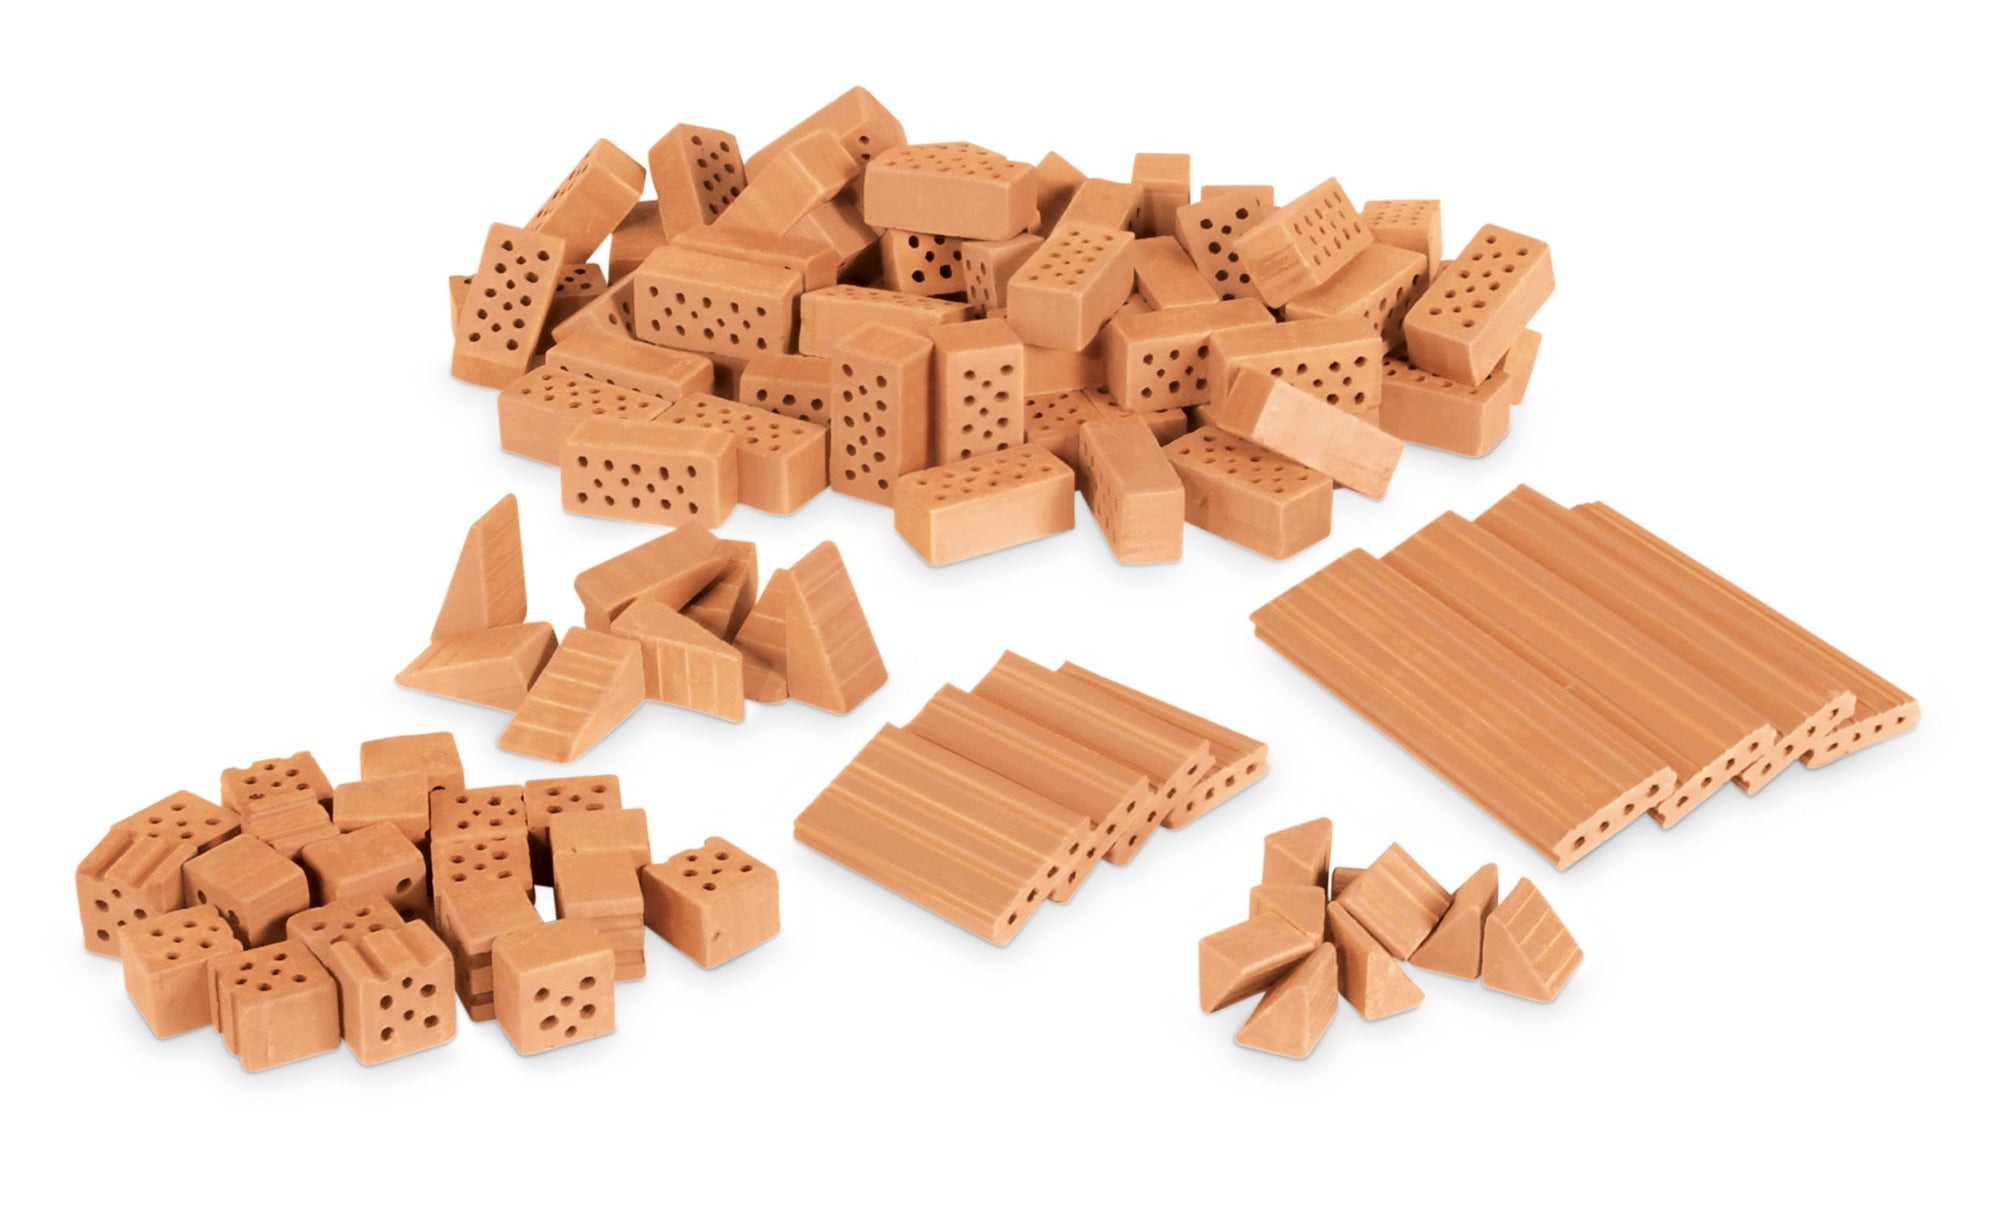 Teifoc Assortment of Bricks